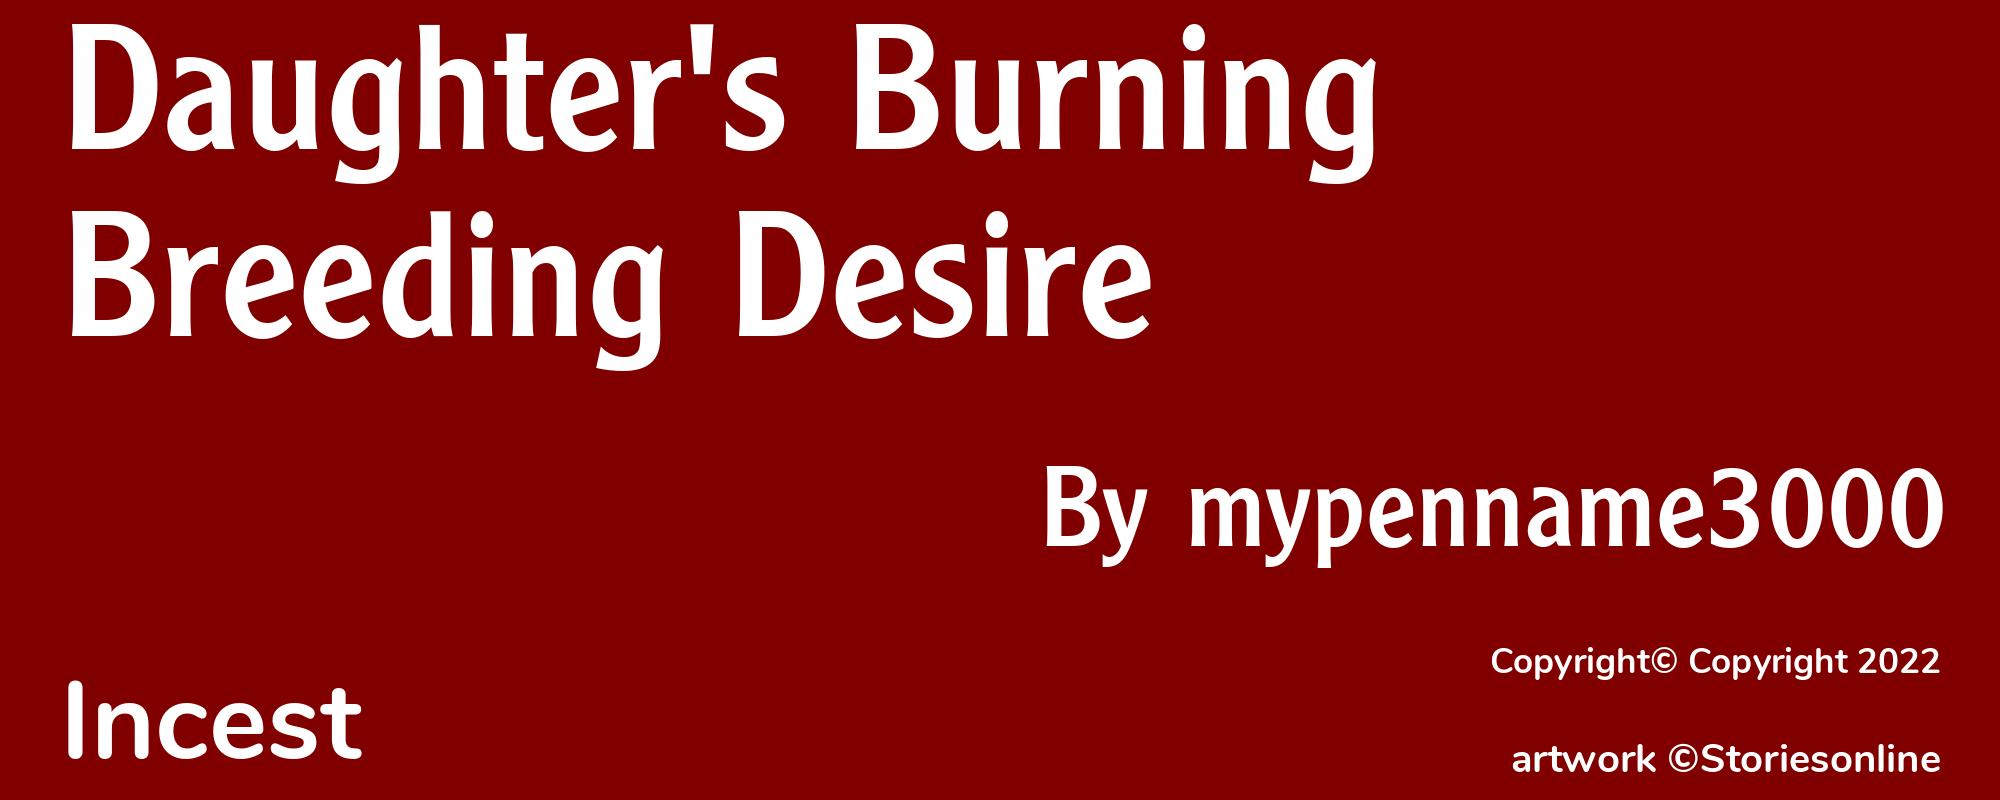 Daughter's Burning Breeding Desire - Cover